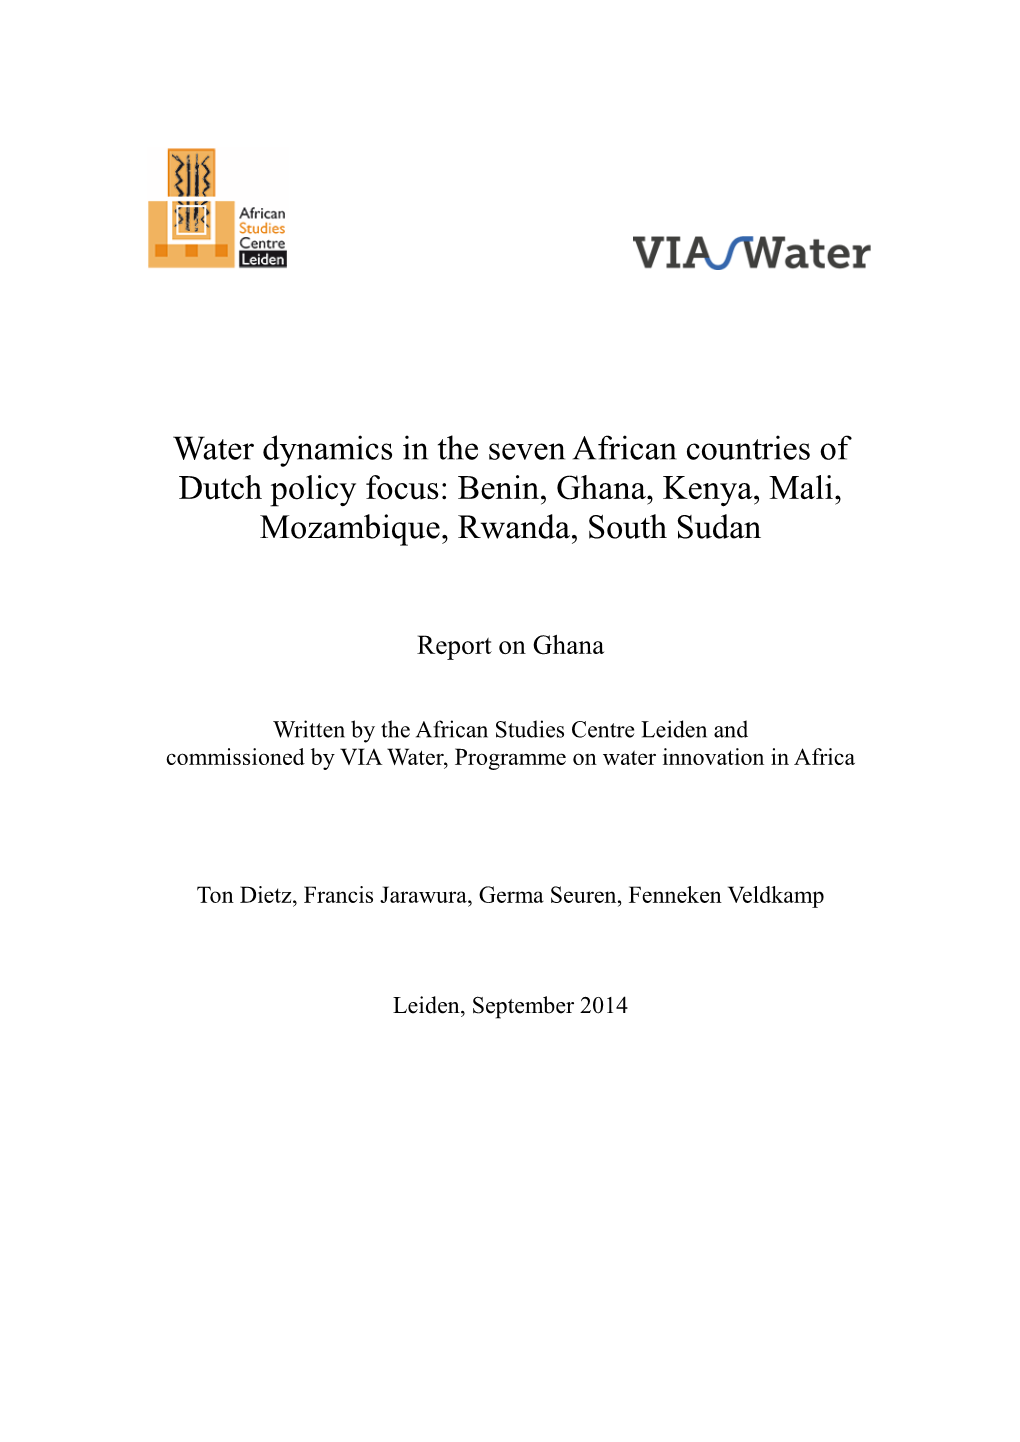 Water Dynamics in the Seven African Countries of Dutch Policy Focus: Benin, Ghana, Kenya, Mali, Mozambique, Rwanda, South Sudan